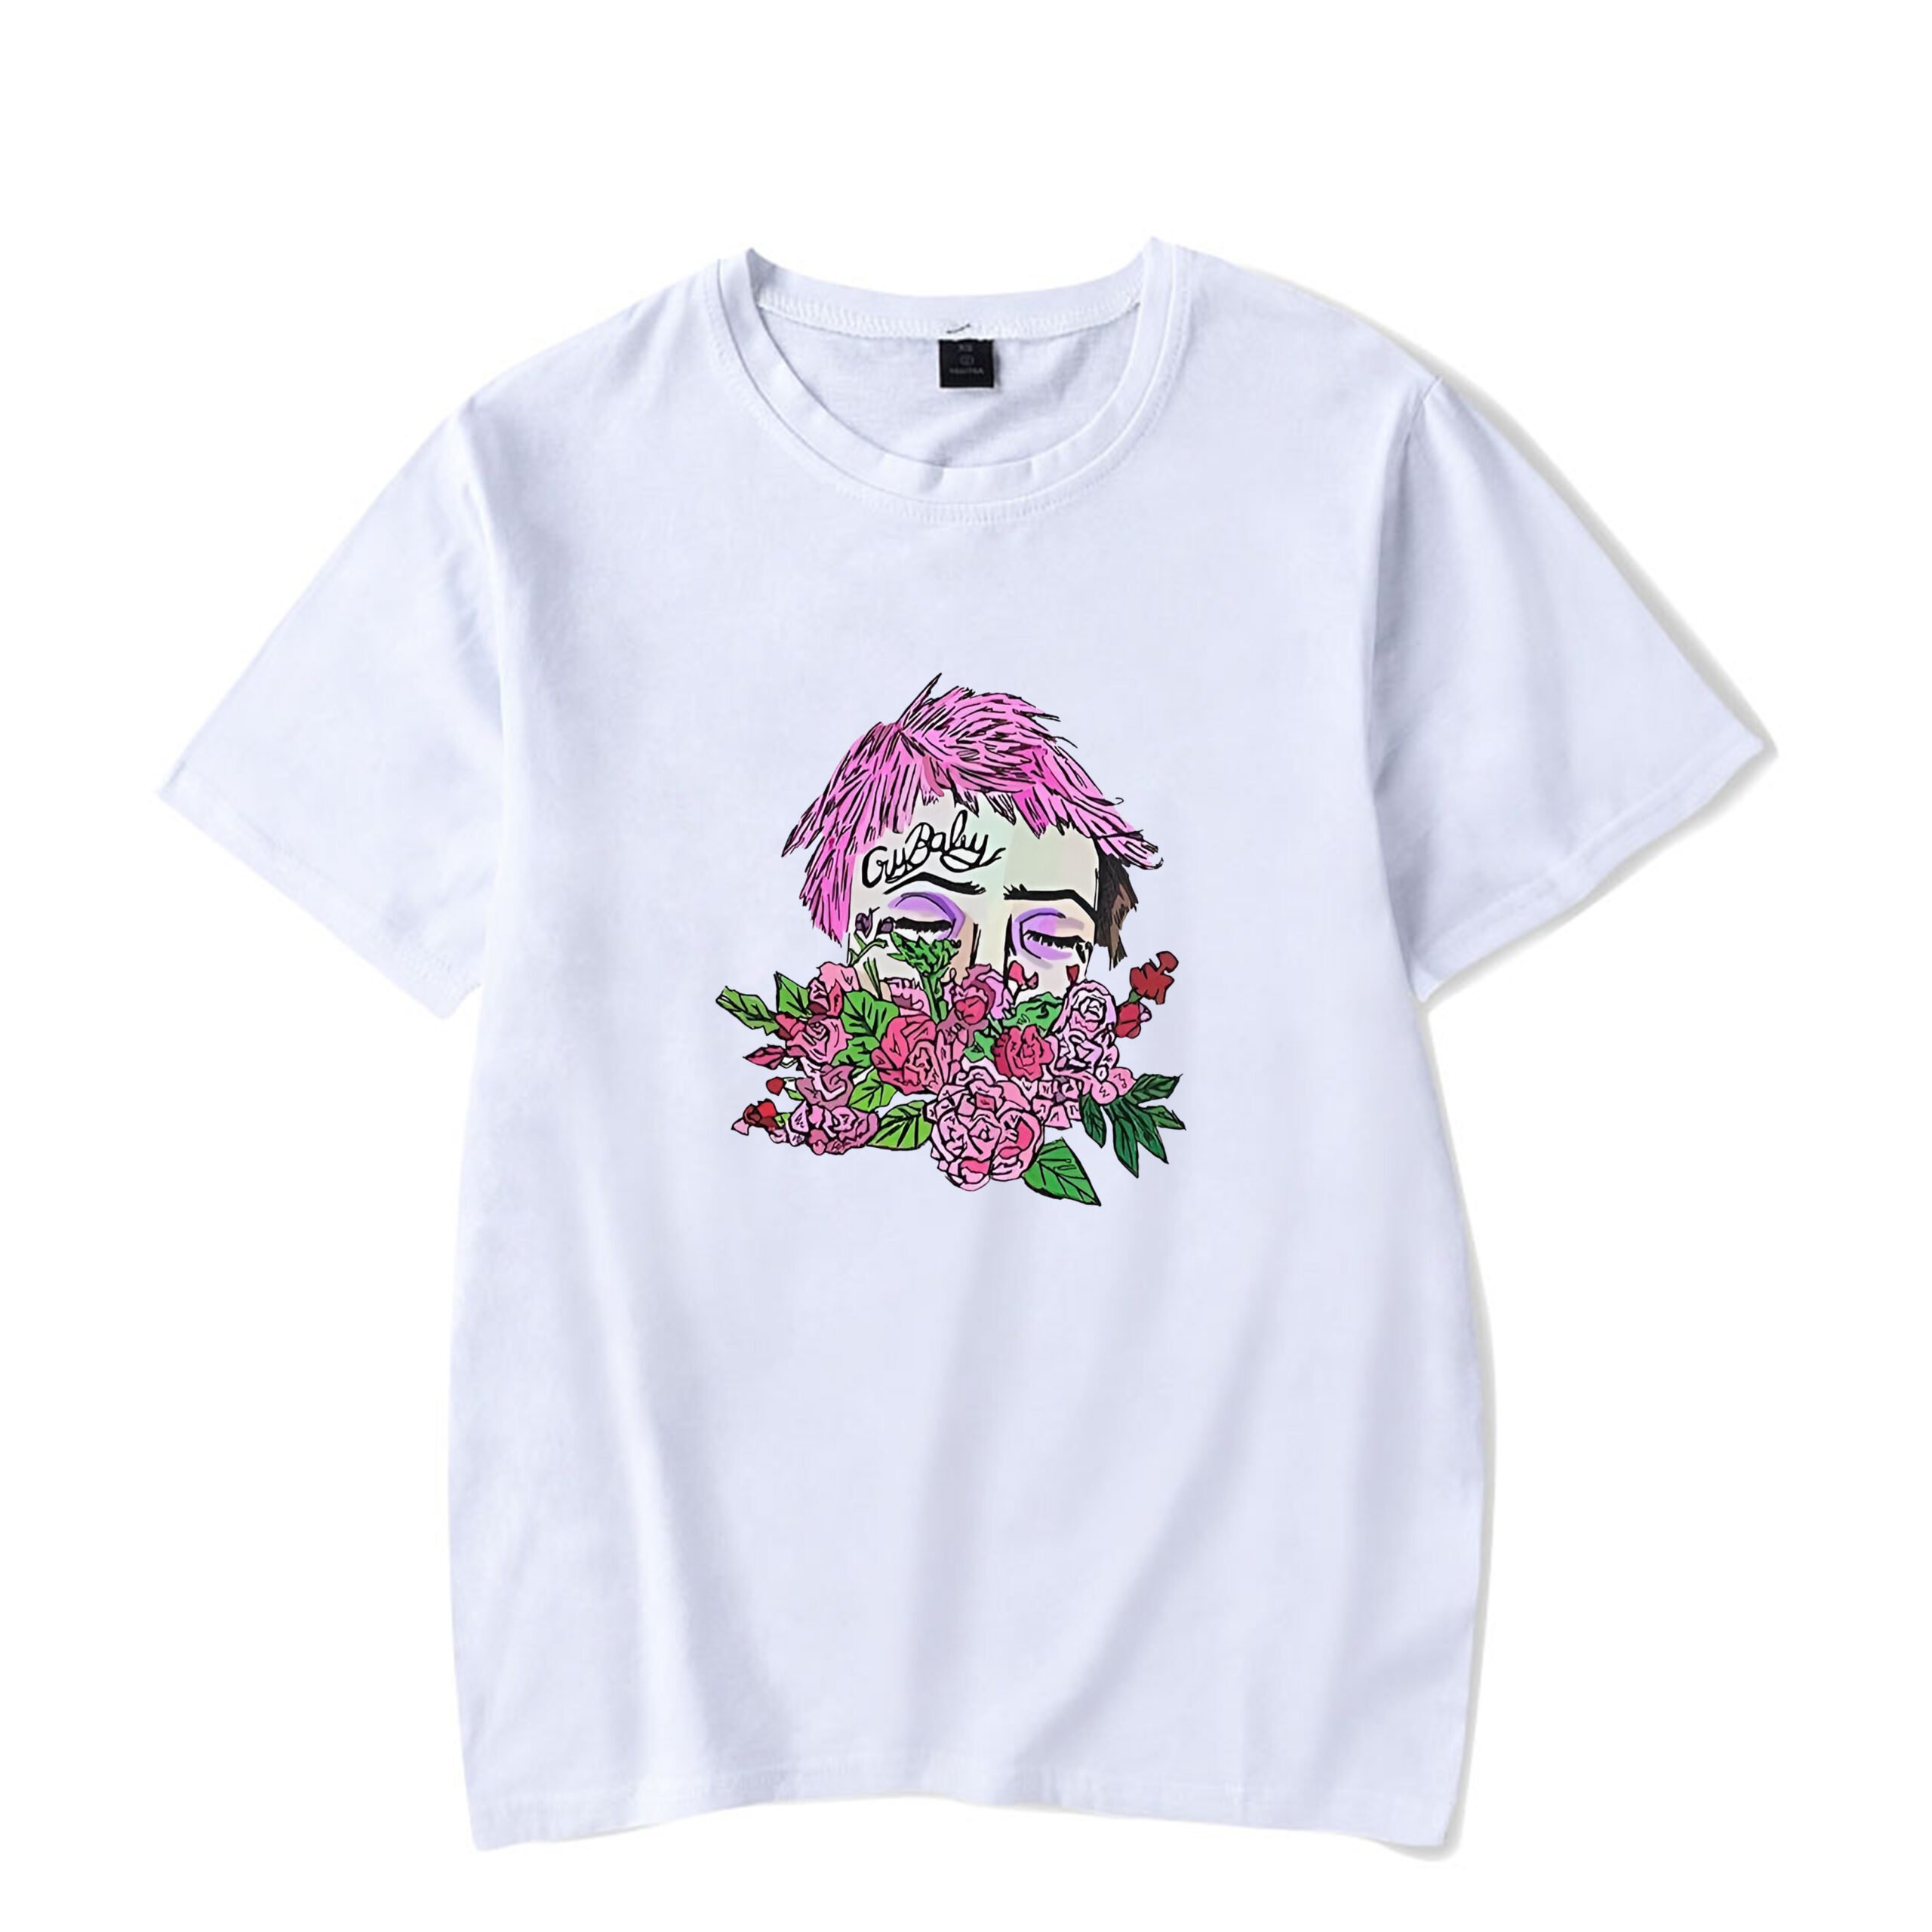 roses t shirt 7192 - Lil Peep Shop